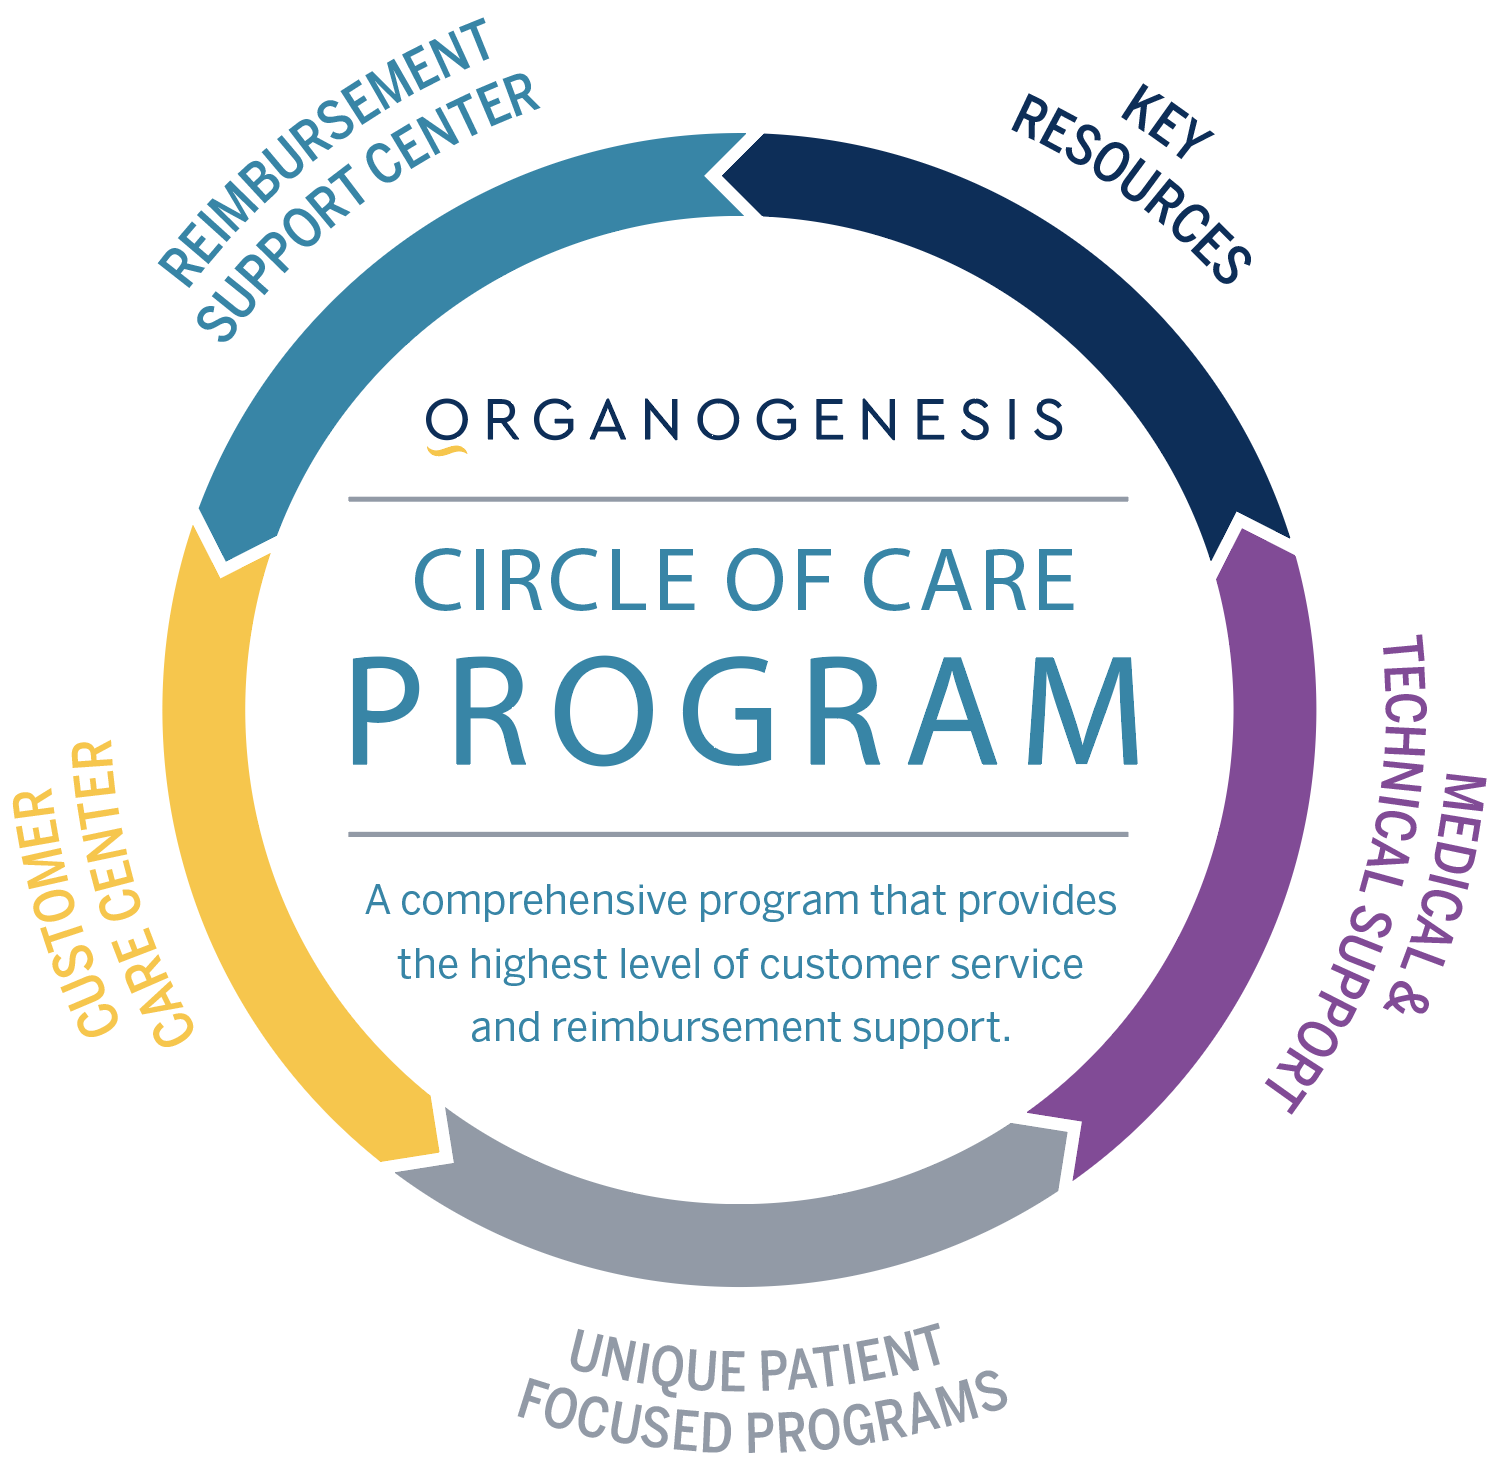 Circle of Care key resources, reimbursement, and customer care